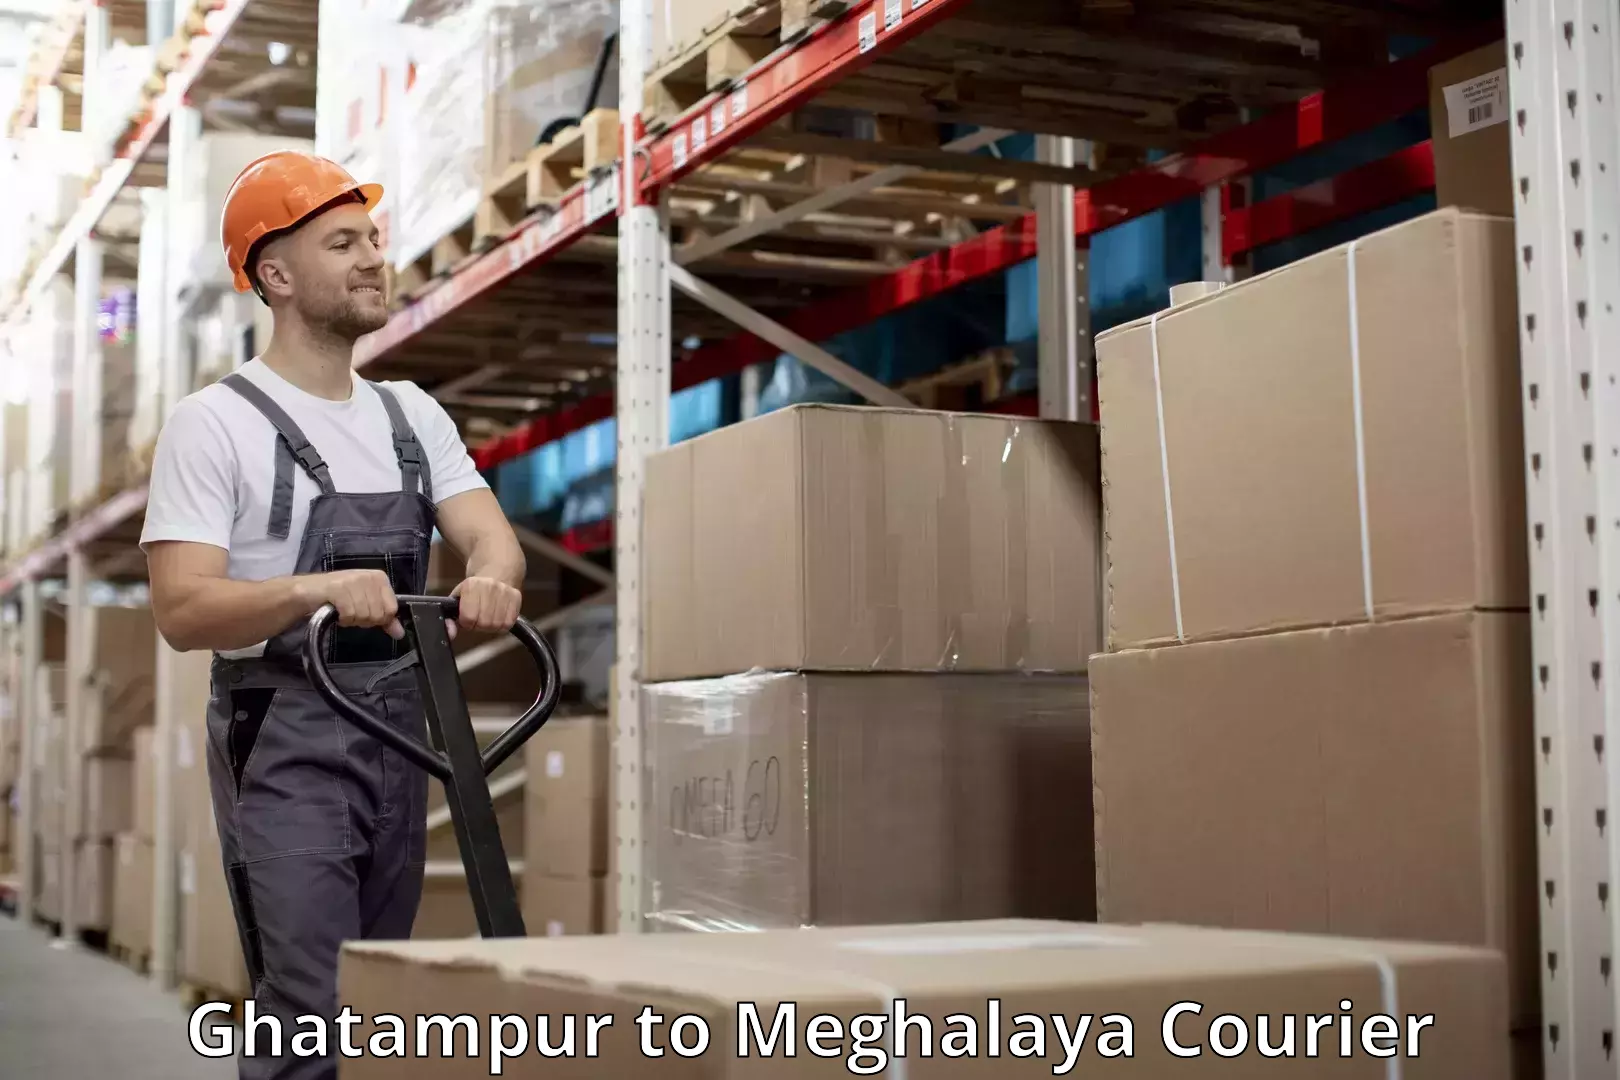 Luggage shipment specialists Ghatampur to Meghalaya